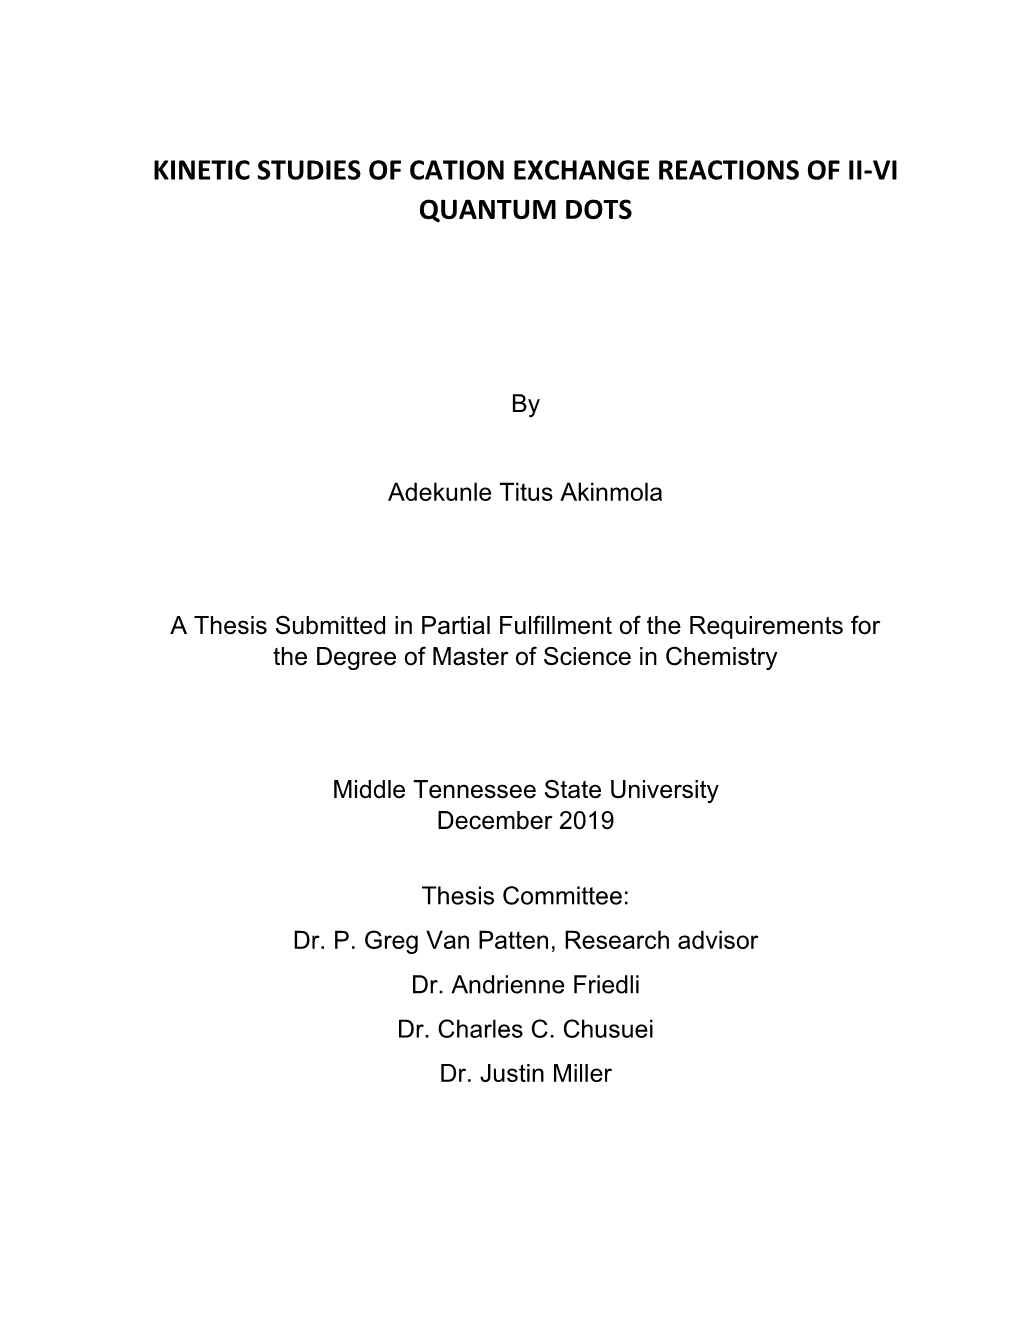 Kinetic Studies of Cation Exchange Reactions of Ii-Vi Quantum Dots